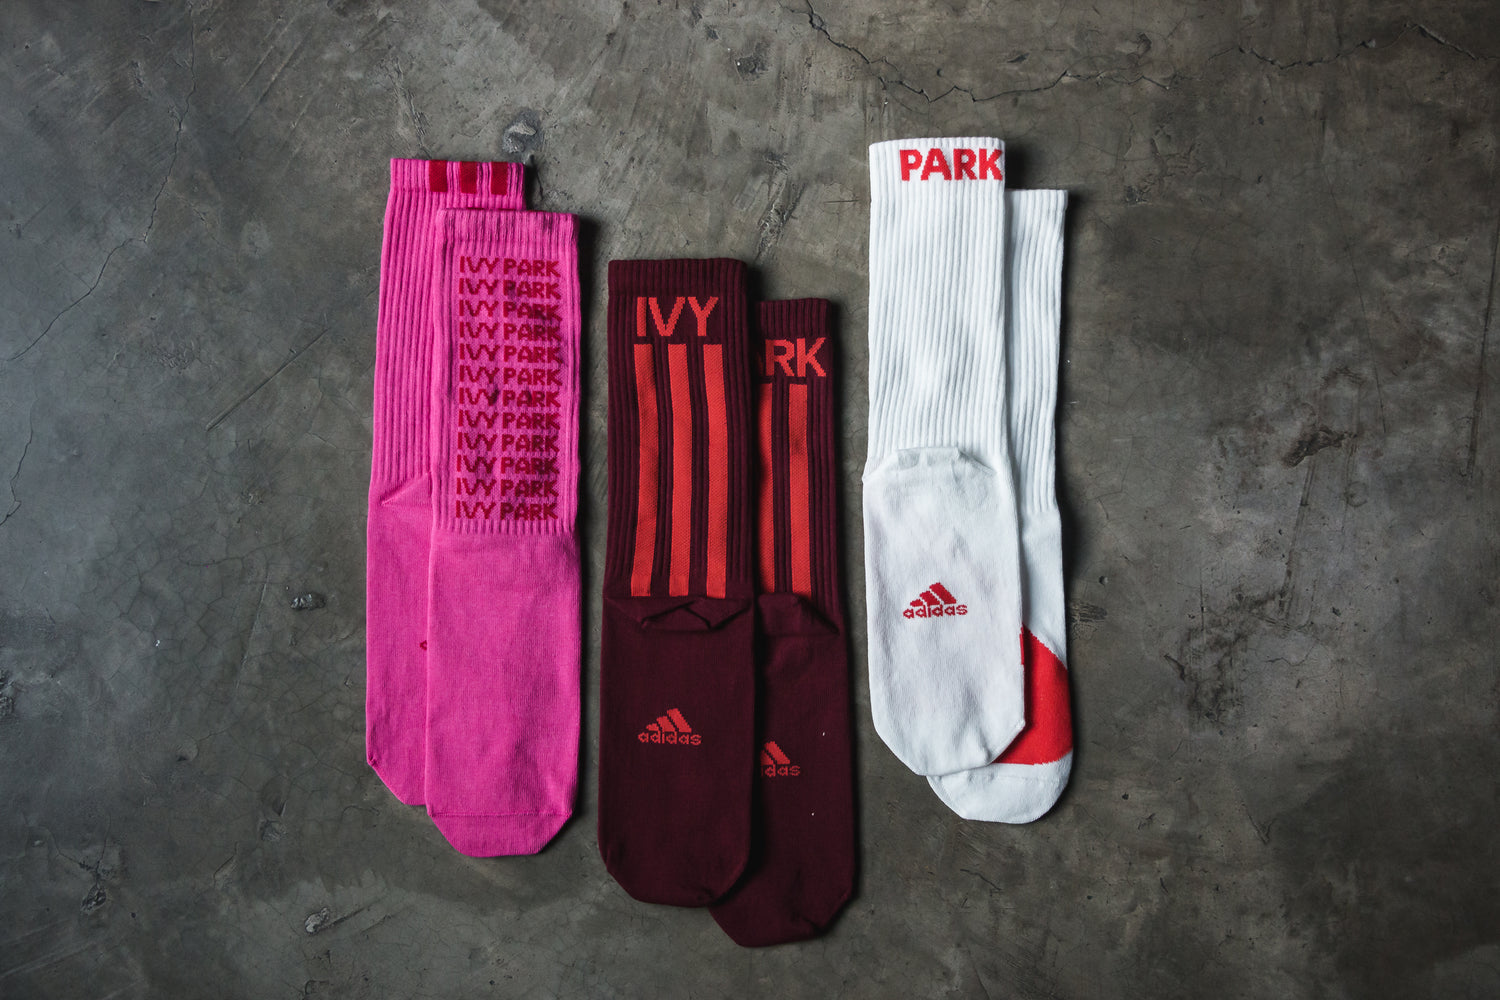 IVY PARK HEART x adidas 3 pack Sock (6710401040450)